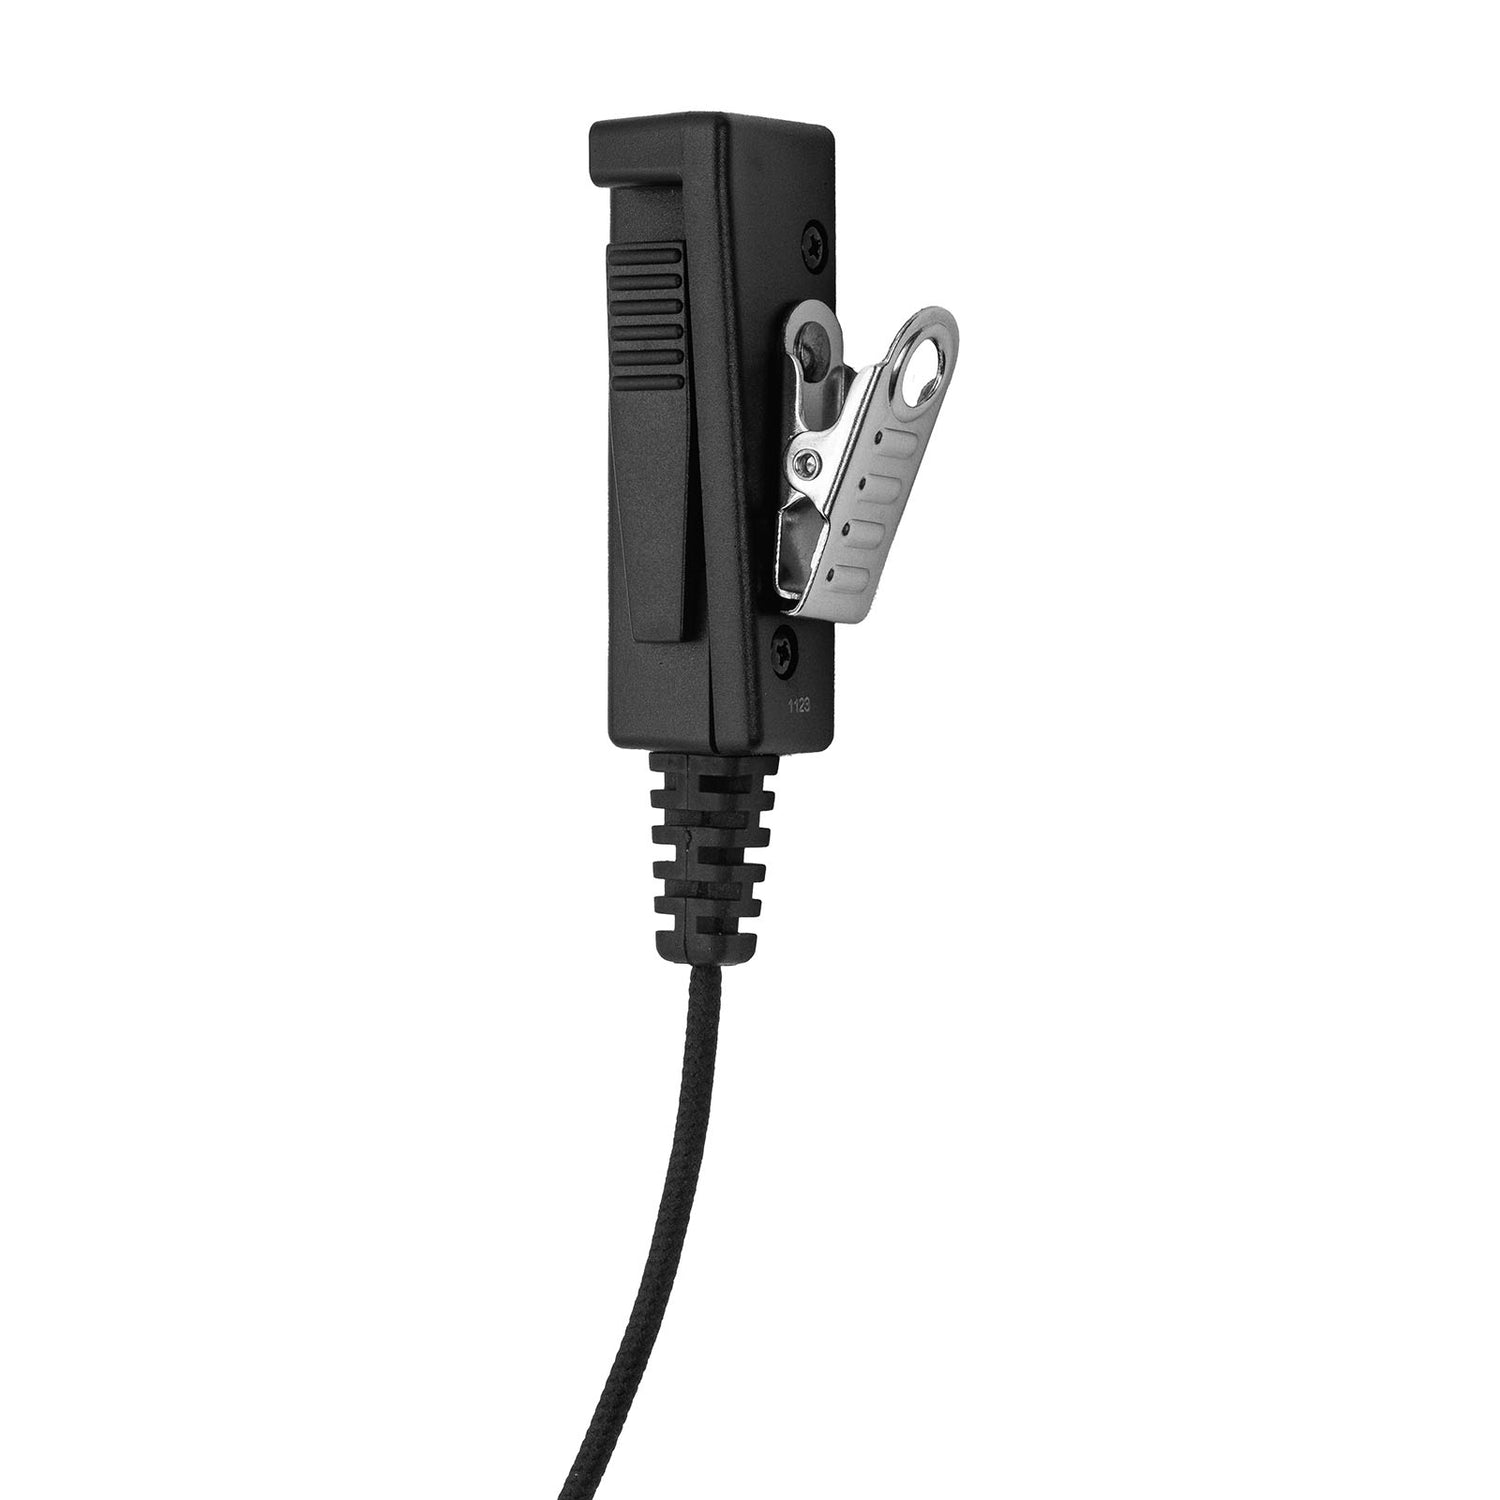 N-ear: 2-Wire Braided Fiber PTT